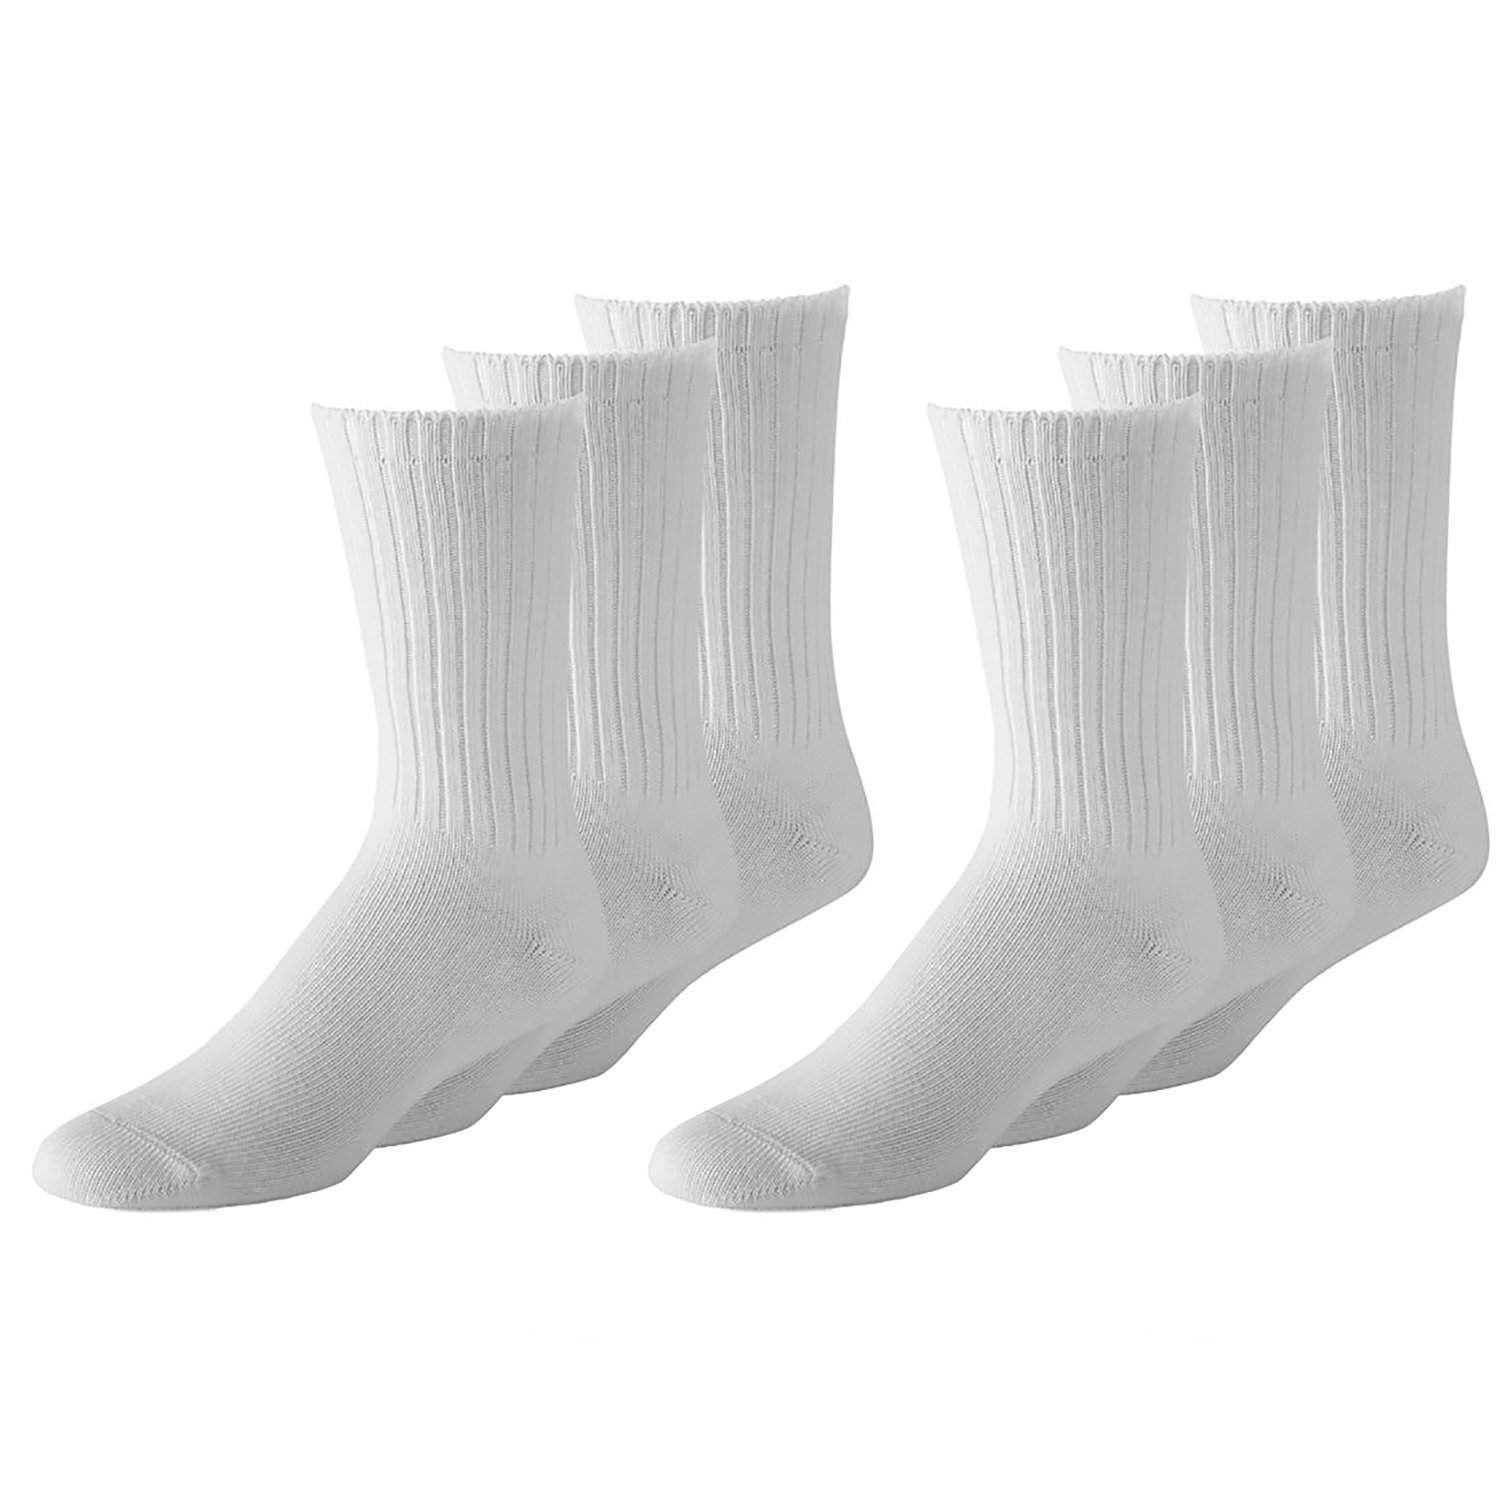 Daily Basic Unisex Crew Athletic Sports Cotton Socks 48 Pack